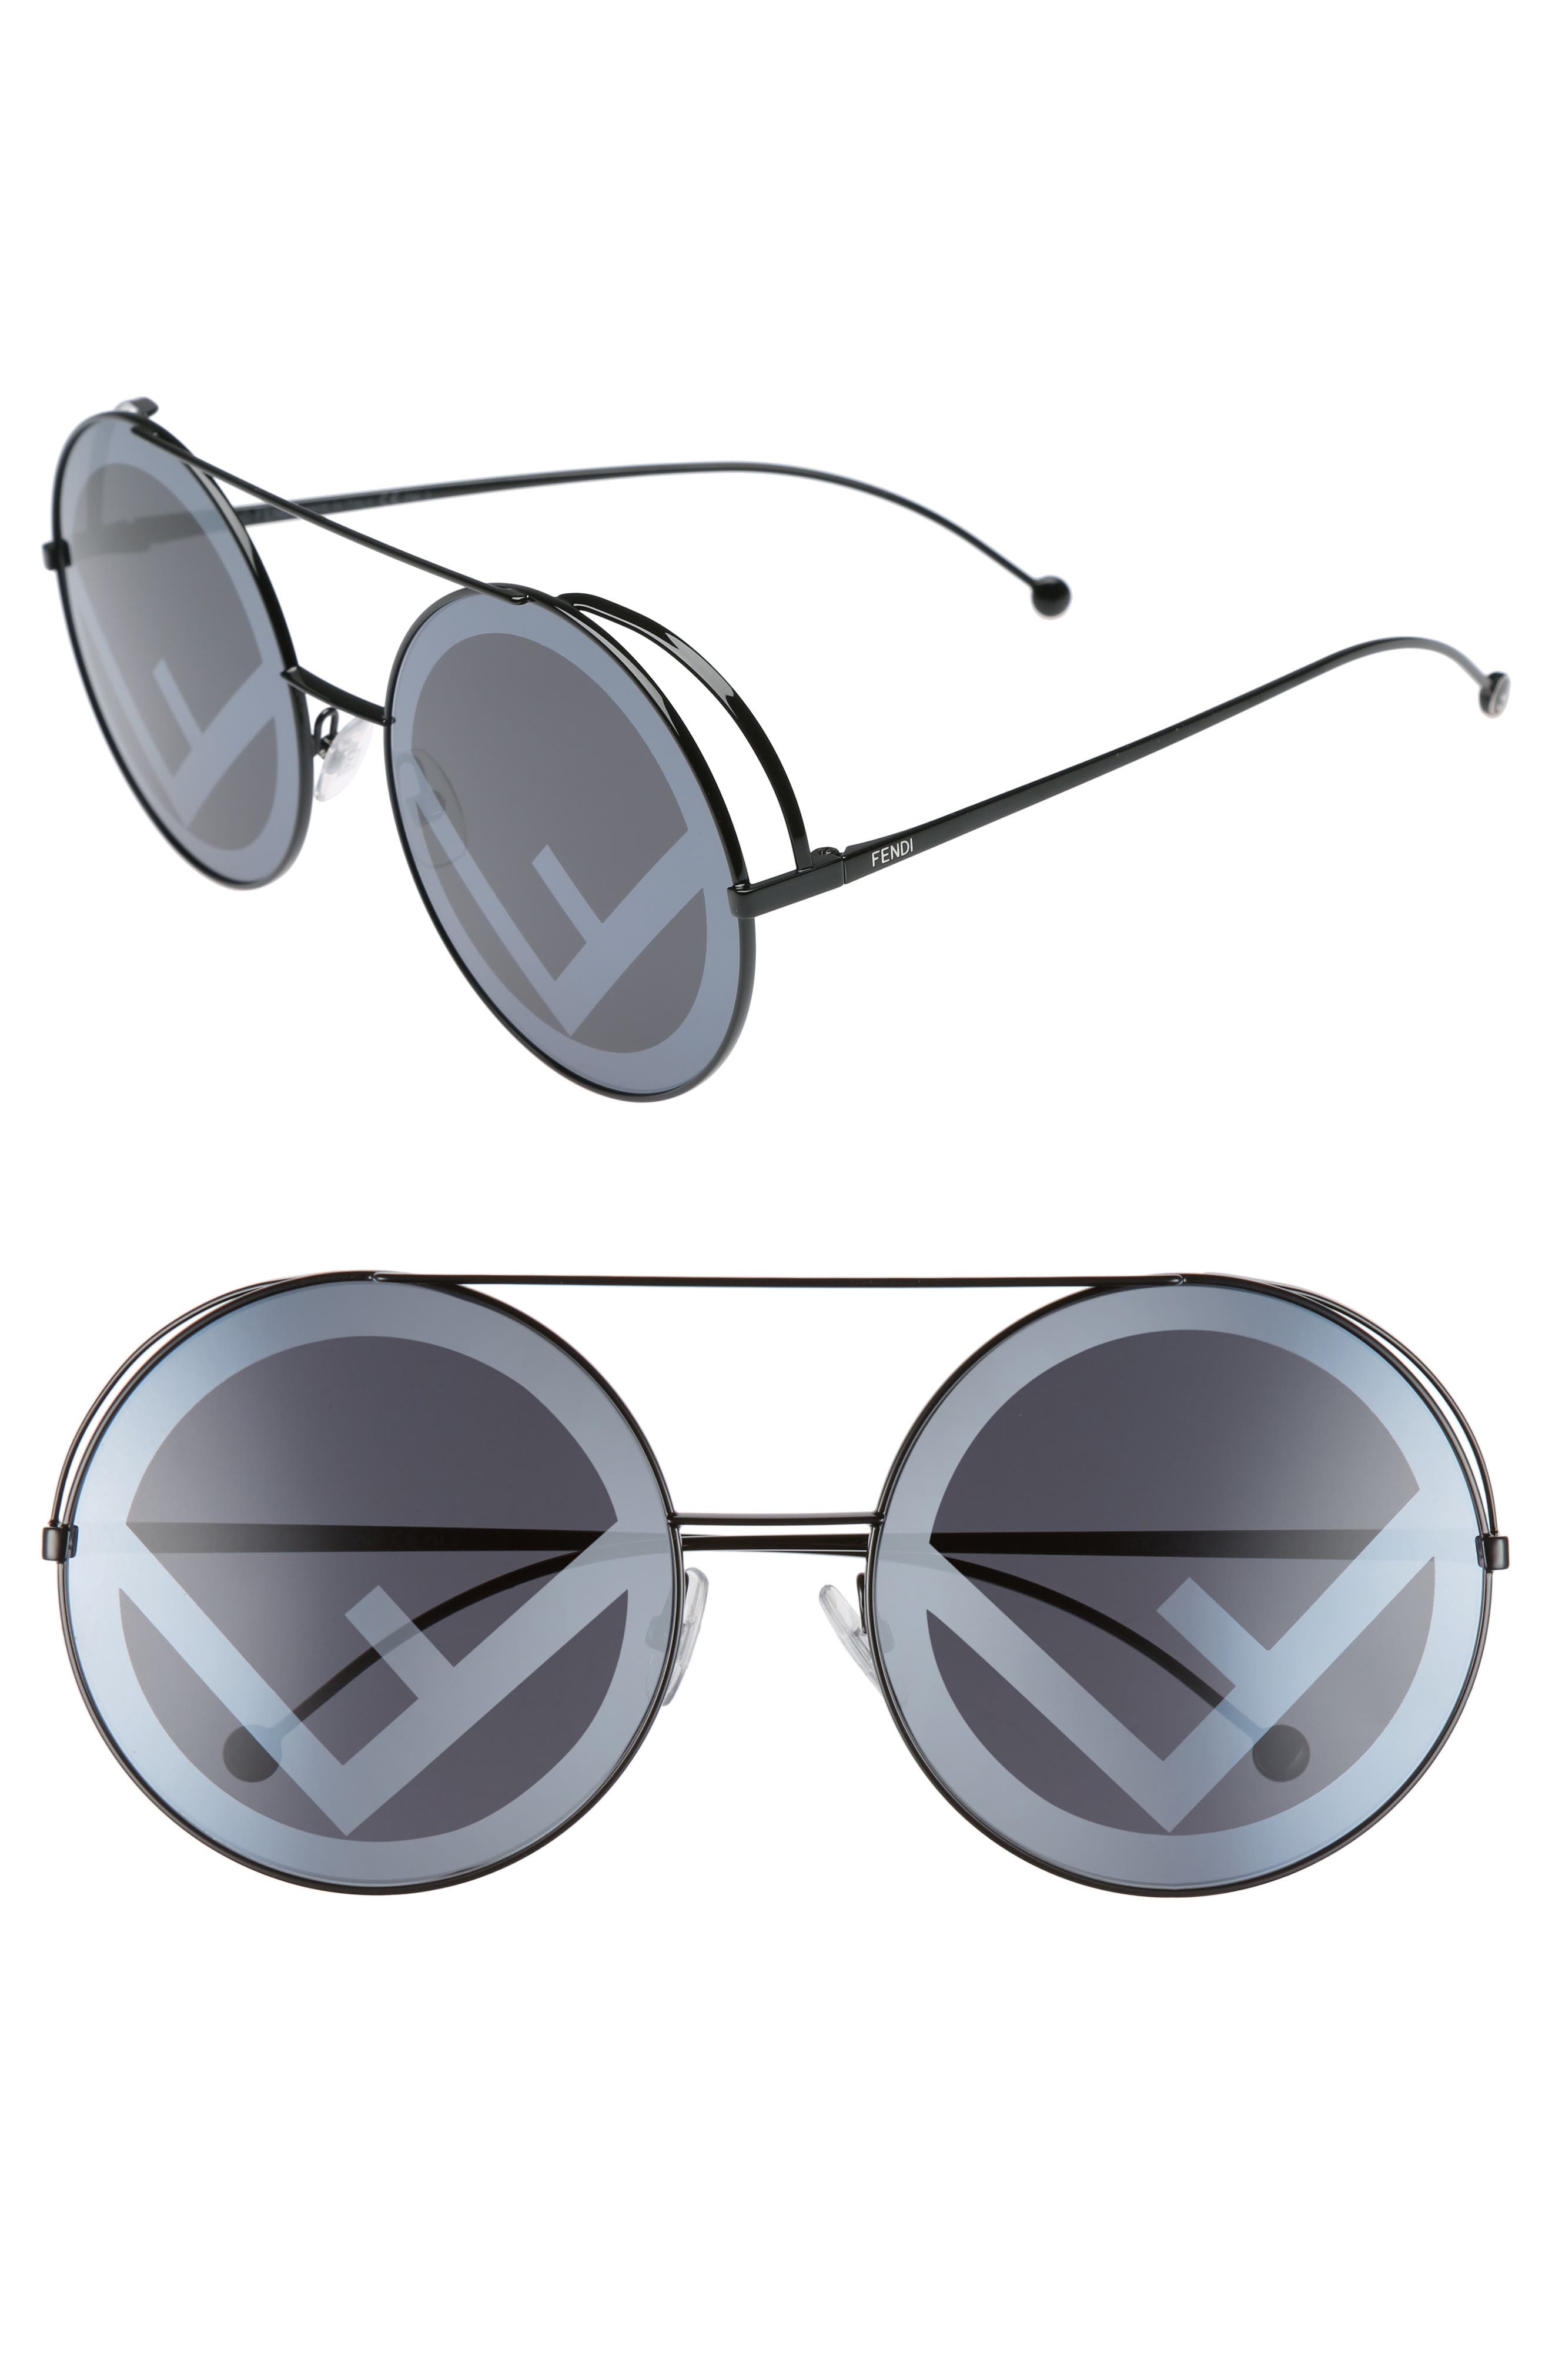 fendi round sunglasses